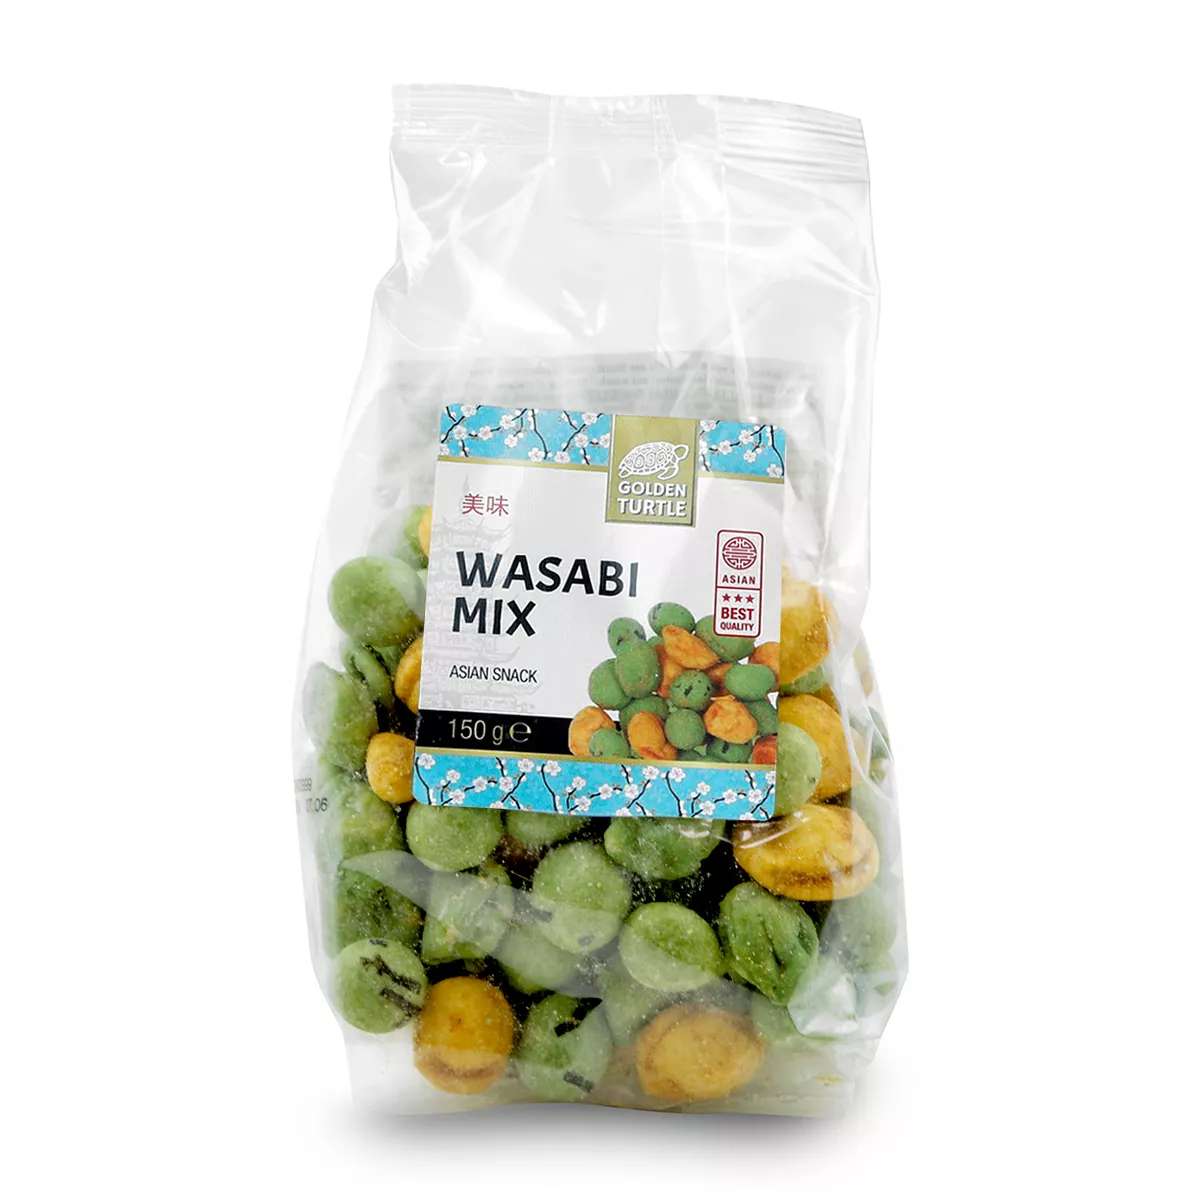 Mix snack cu wasabi GT 150g, [],asianfood.ro